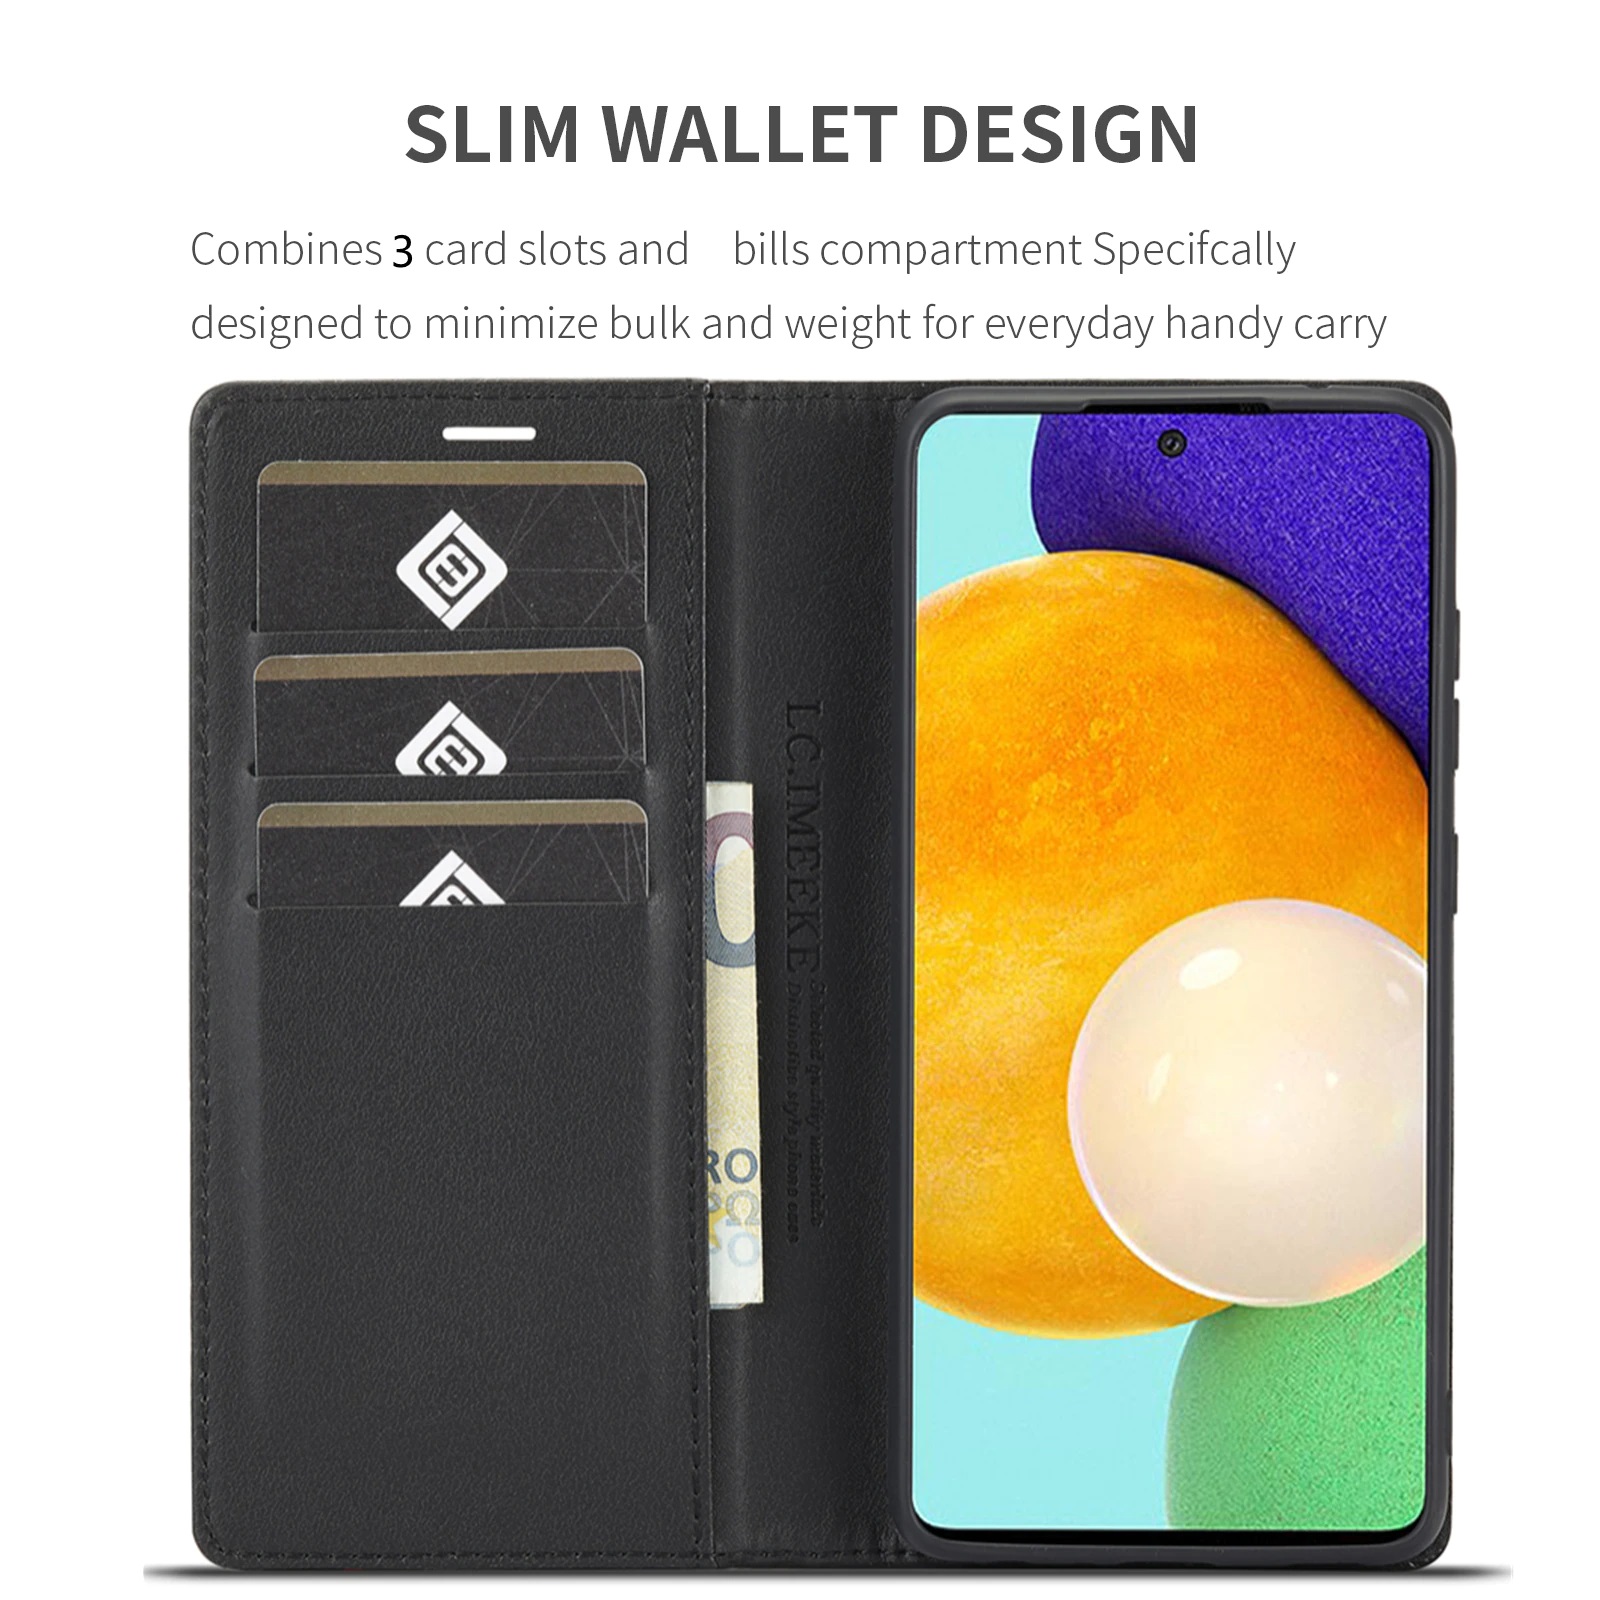 Slim wallet design